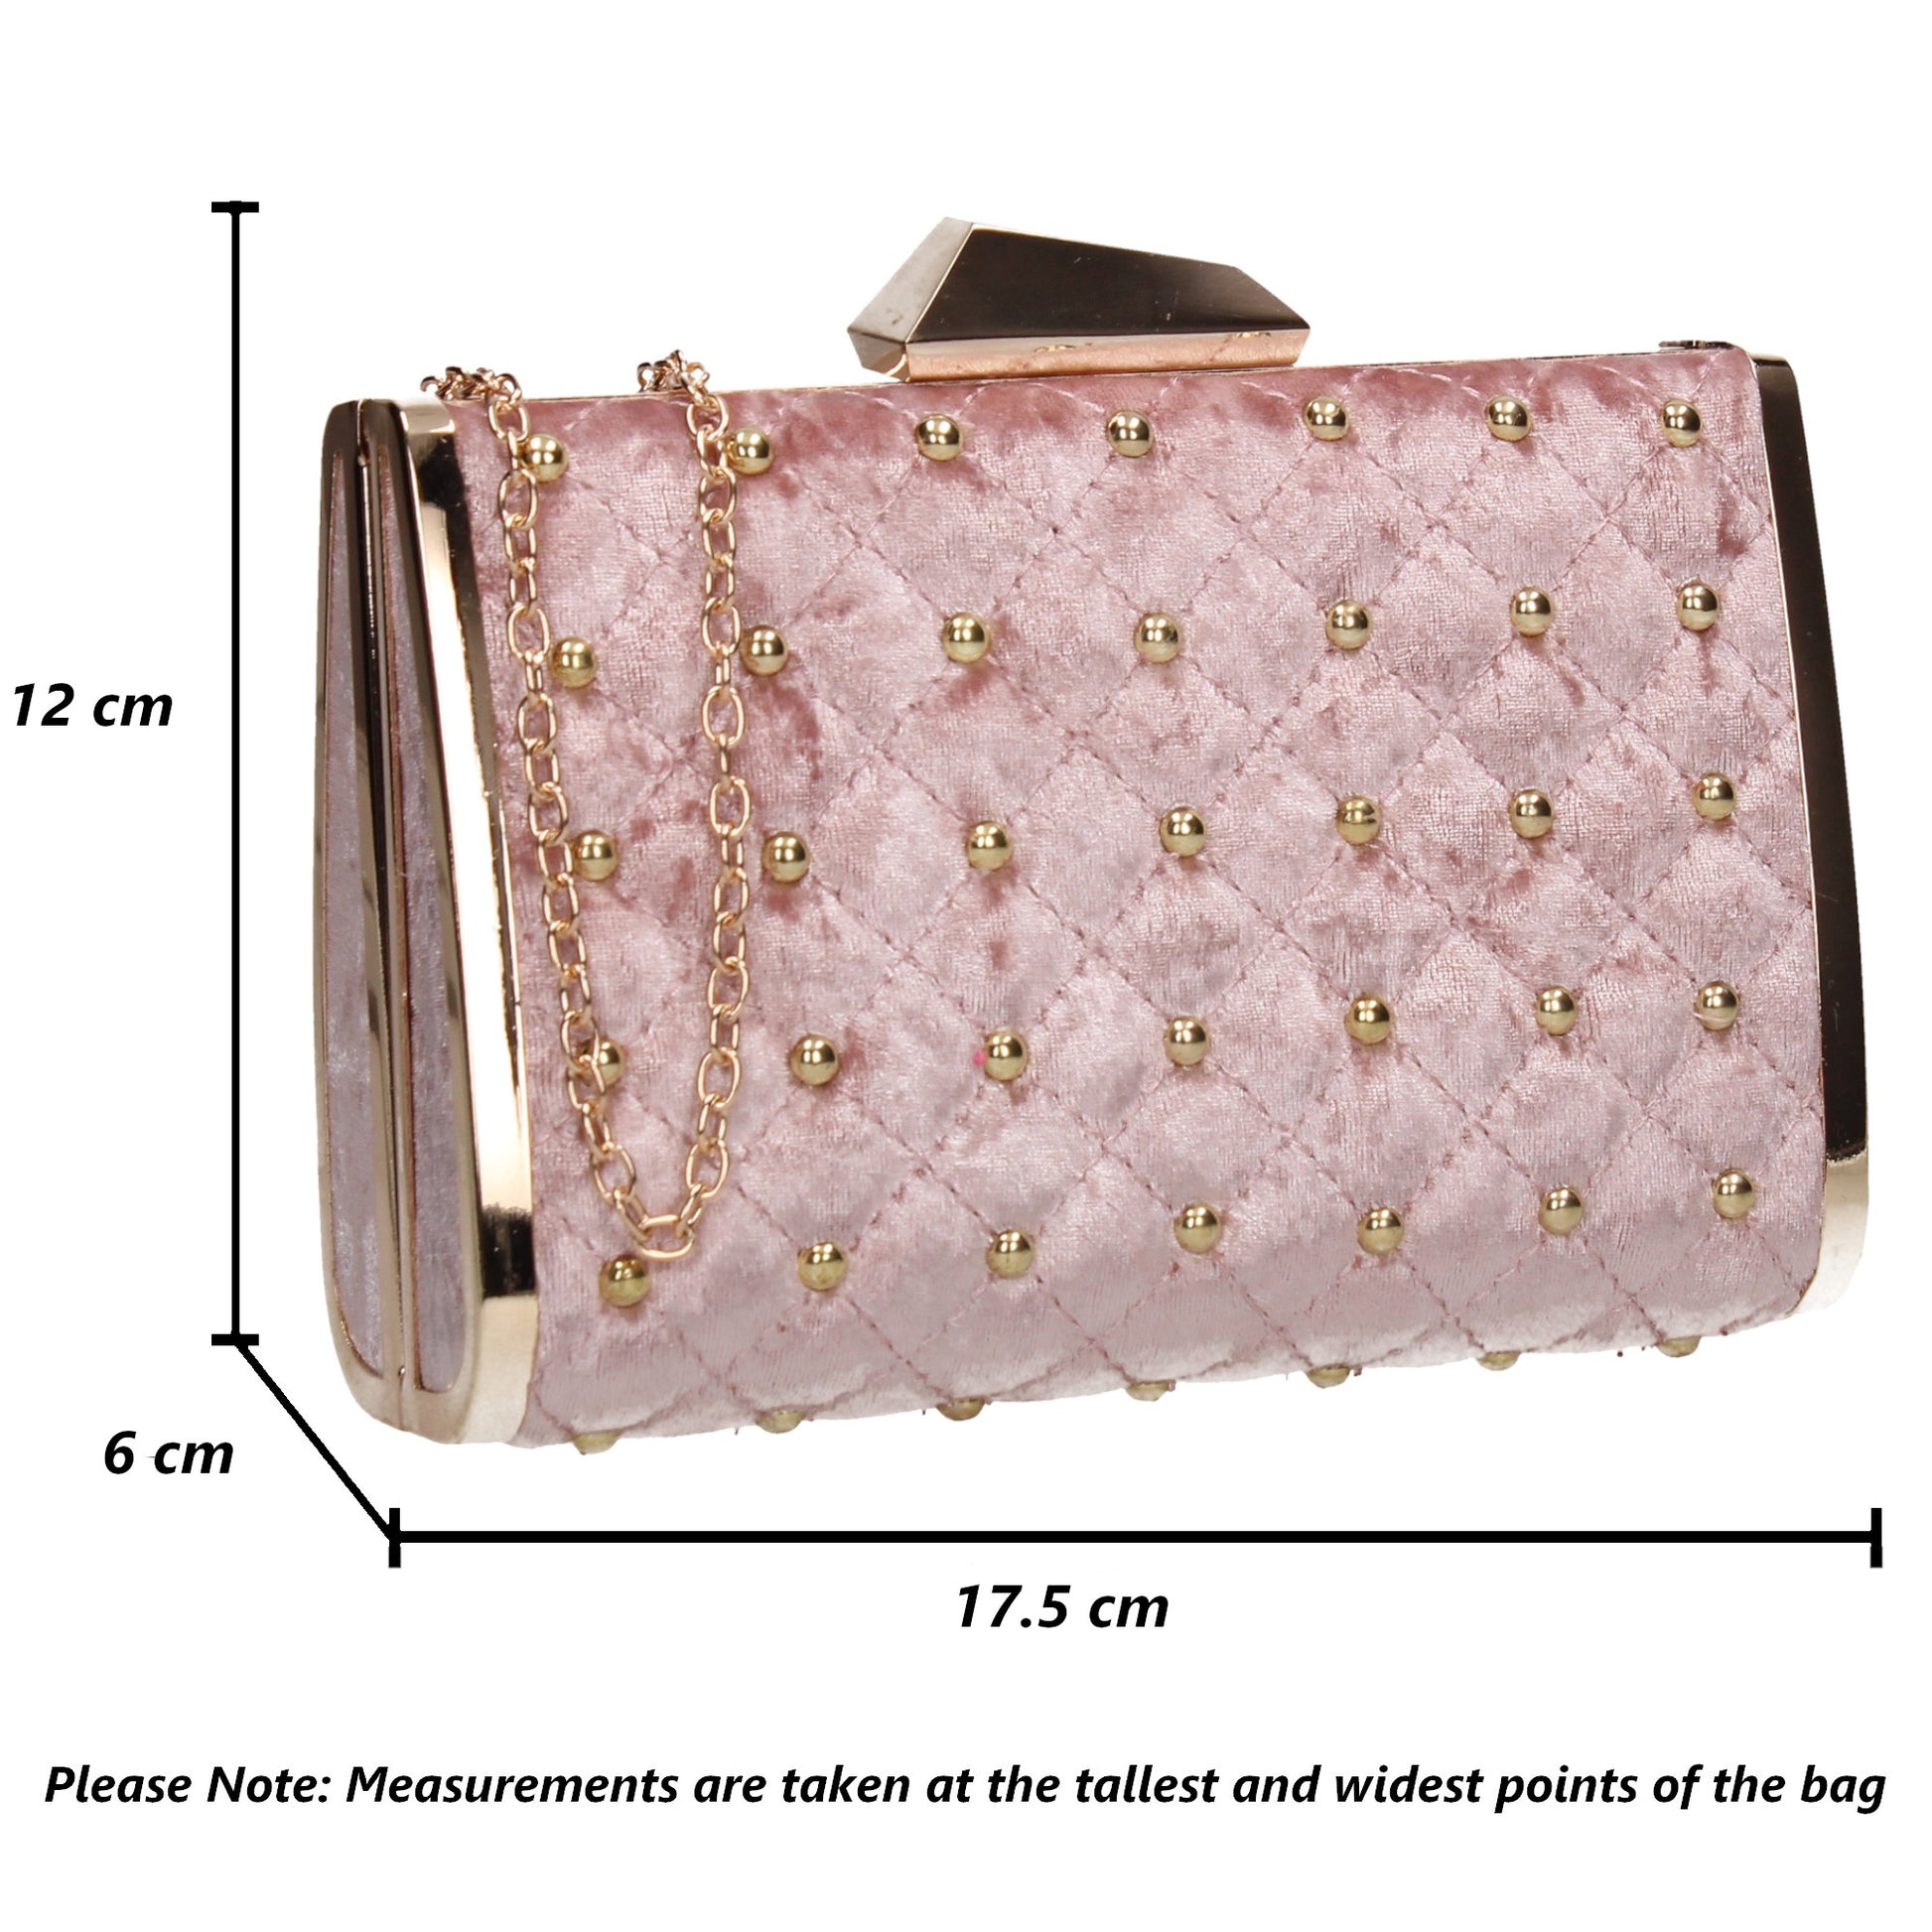 SWANKYSWANS Nyla Studded Velvet Clutch Bag Pink